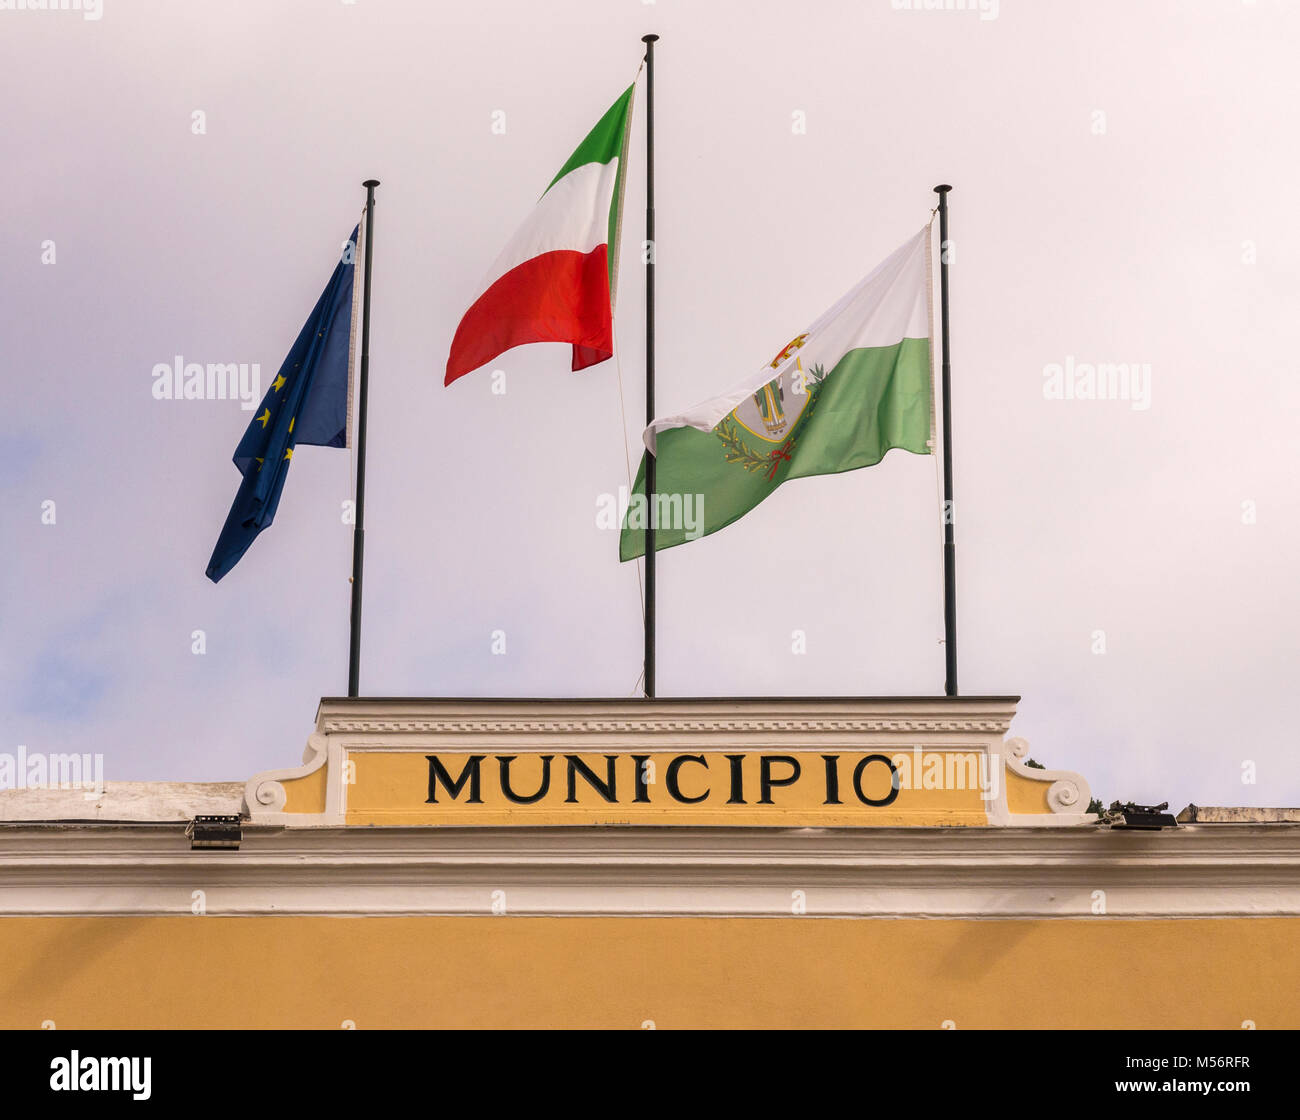 Municipio sign and flags, Piazza Umberto I Capri, Italy Stock Photo - Alamy